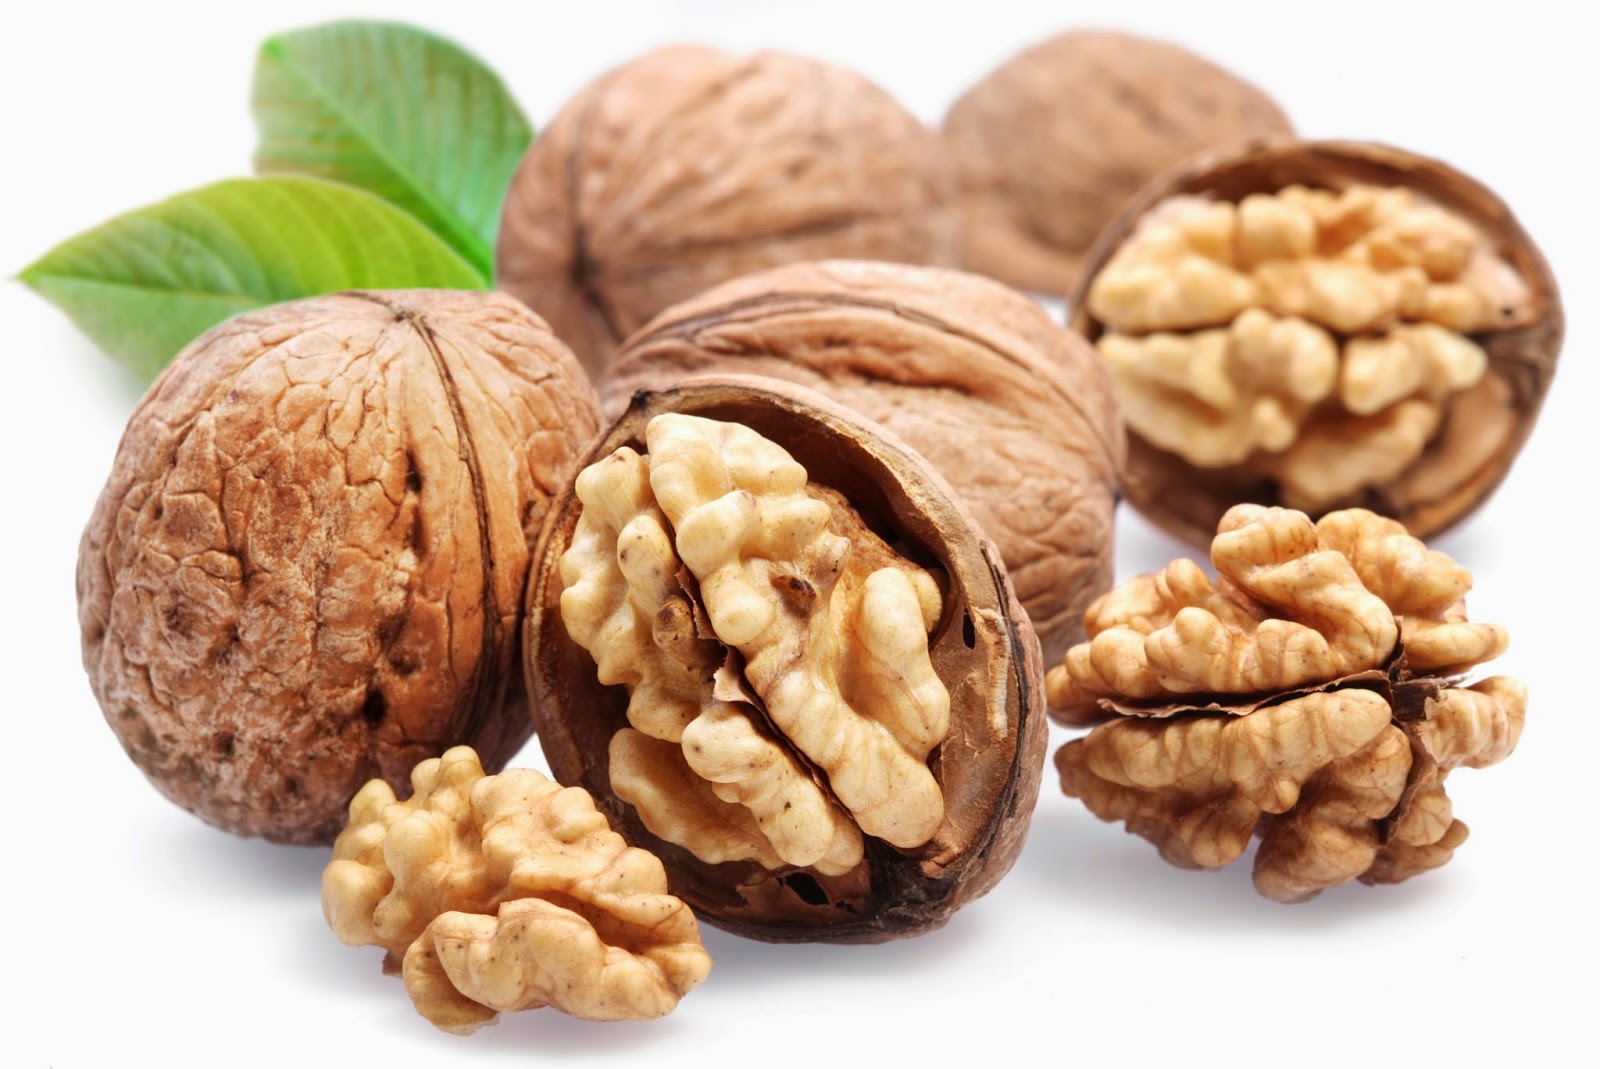 nutritional demerits of walnuts